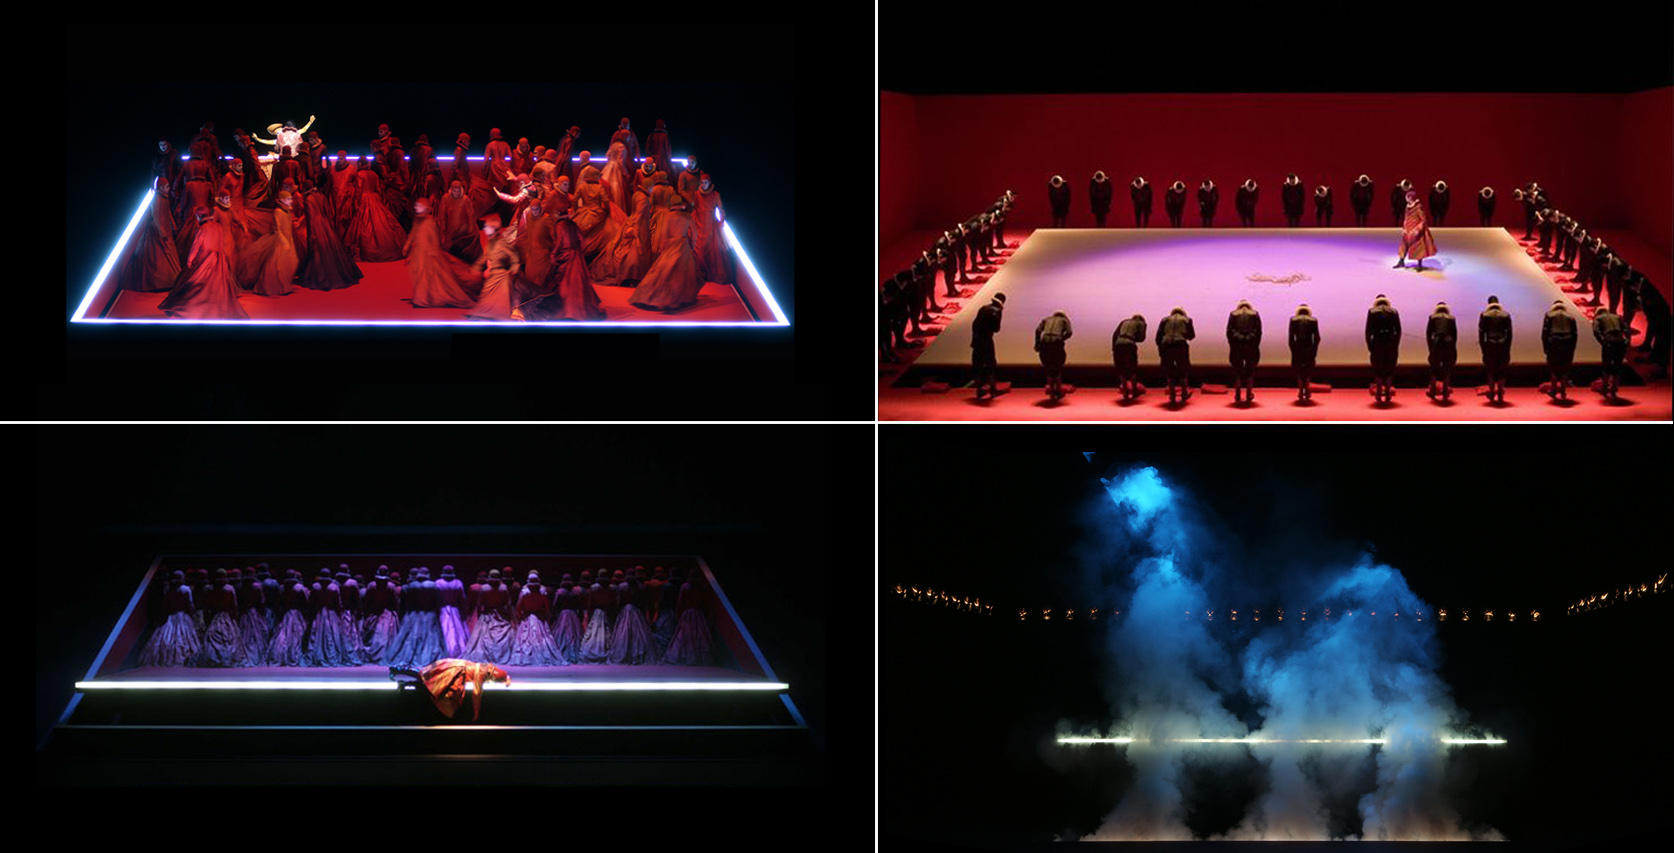 Cuatro momentos de "Rigoletto" ©Michael Levine